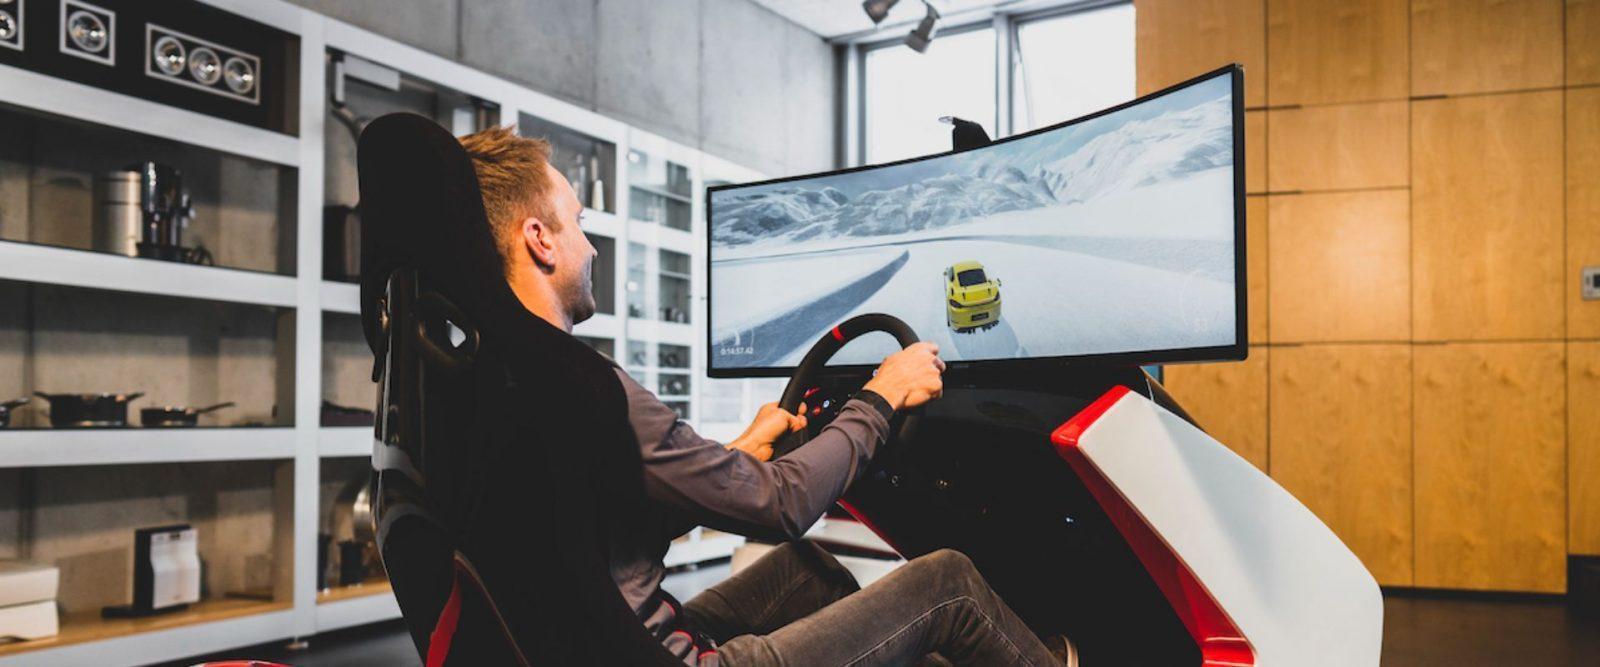 Porsche Virtual Roads can scan your favourite roads